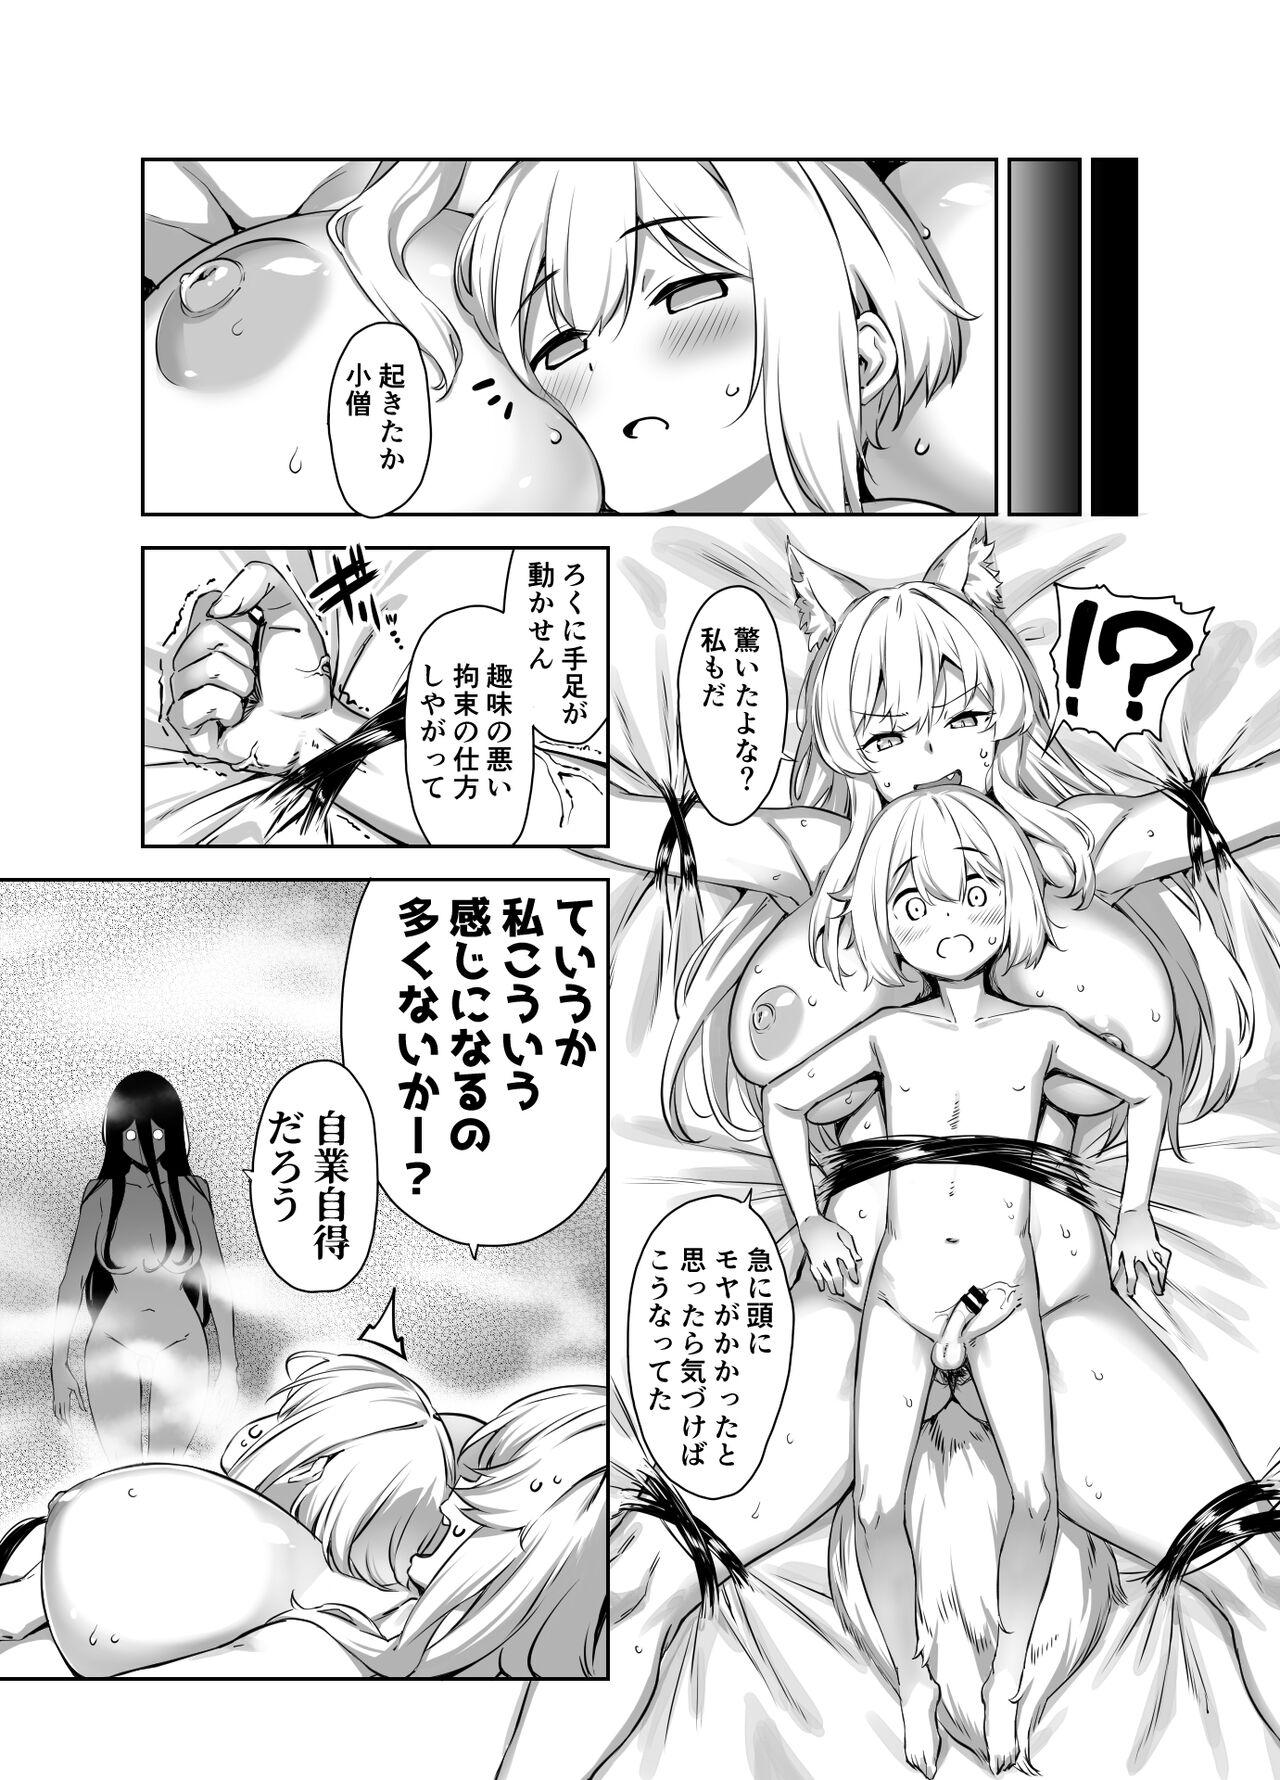 Omake Manga 9